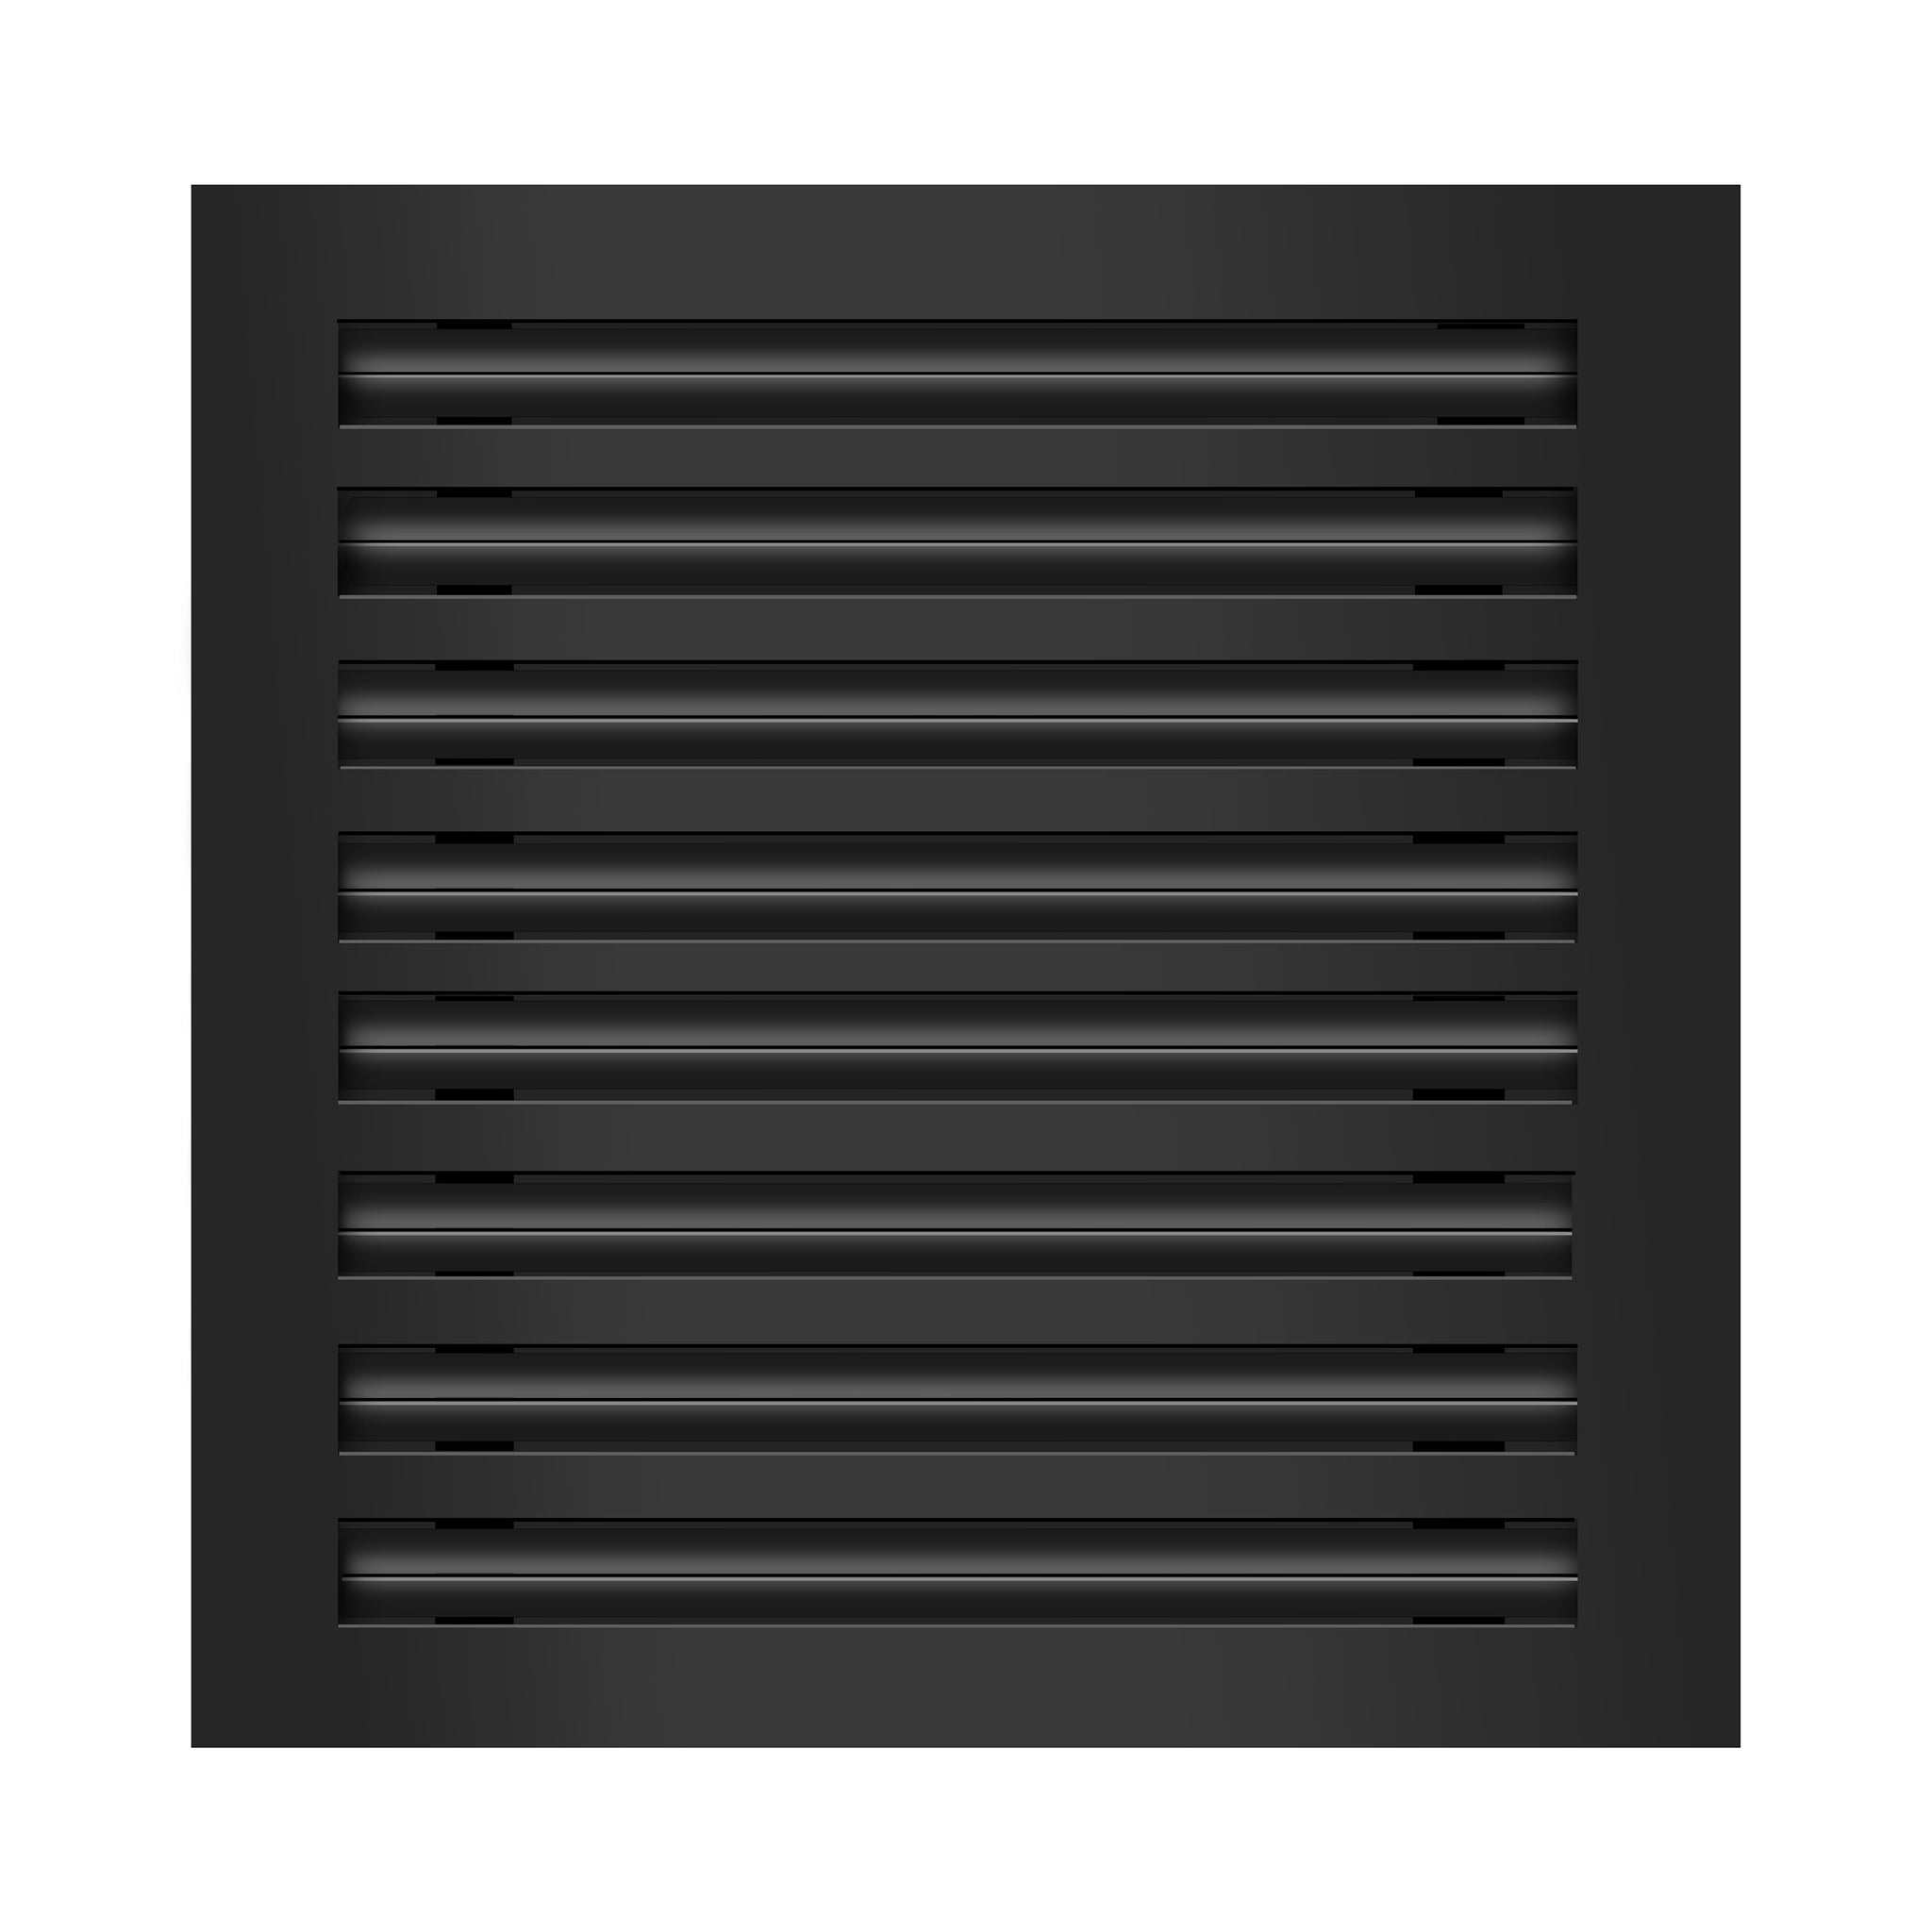 Front of 16x16 Modern Air Vent Cover Black - 16x16 Standard Linear Slot Diffuser Black - Texas Buildmart